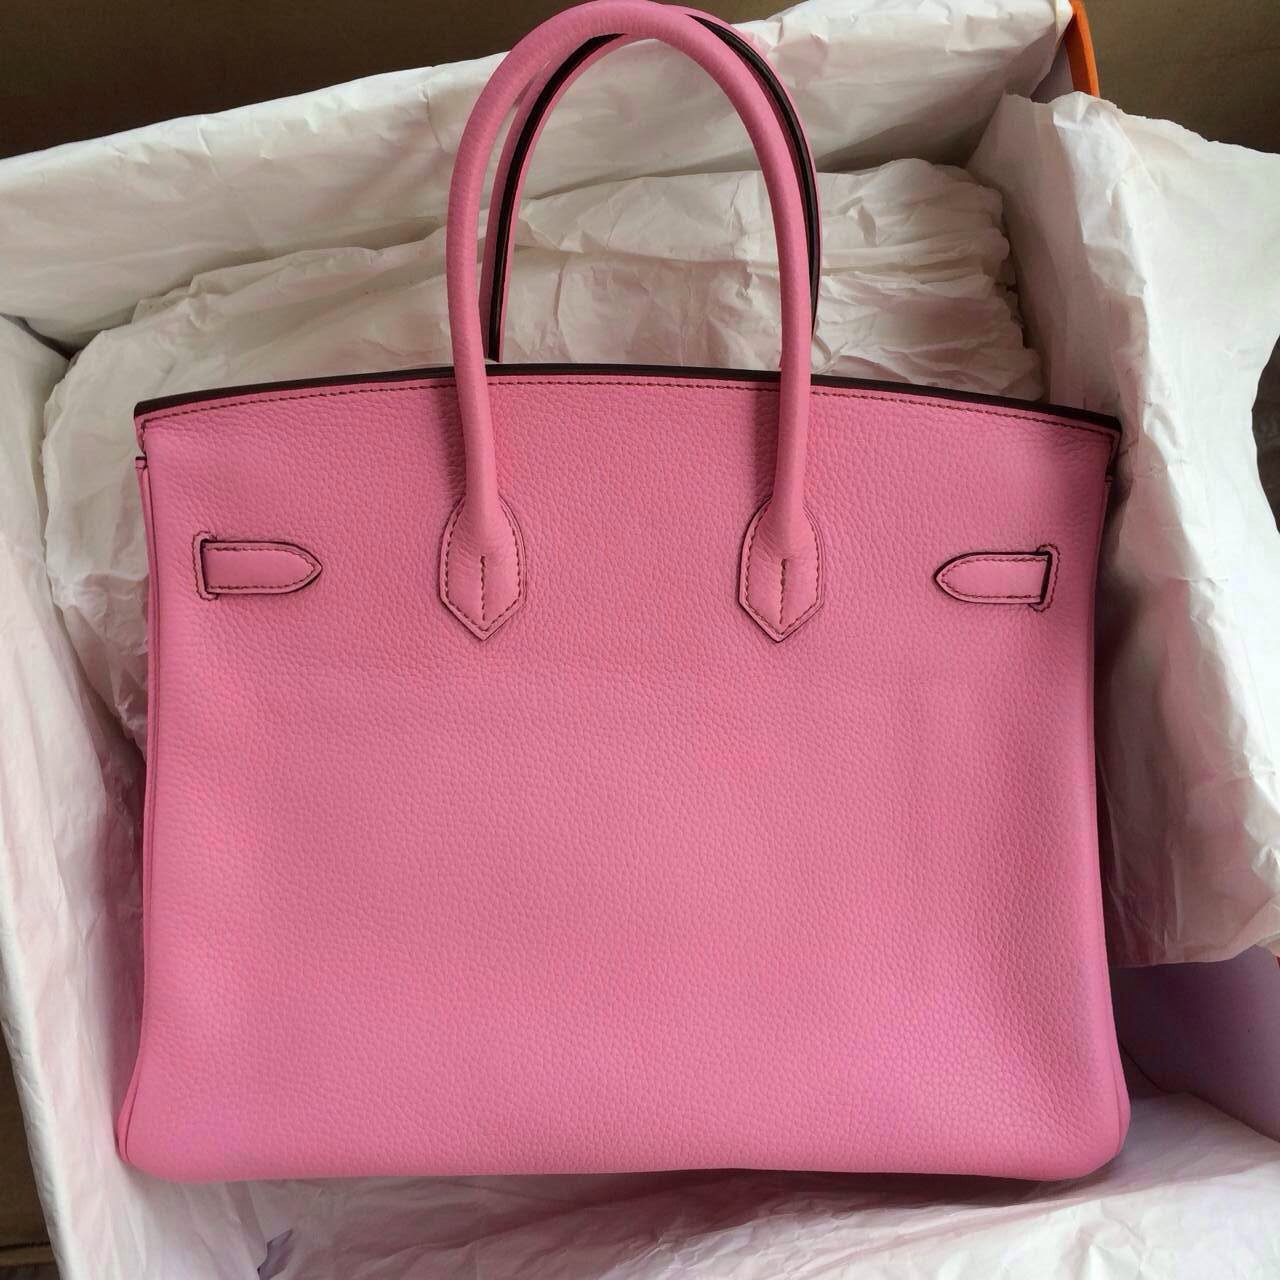 Birkin bag Pink 35cm gold hardware